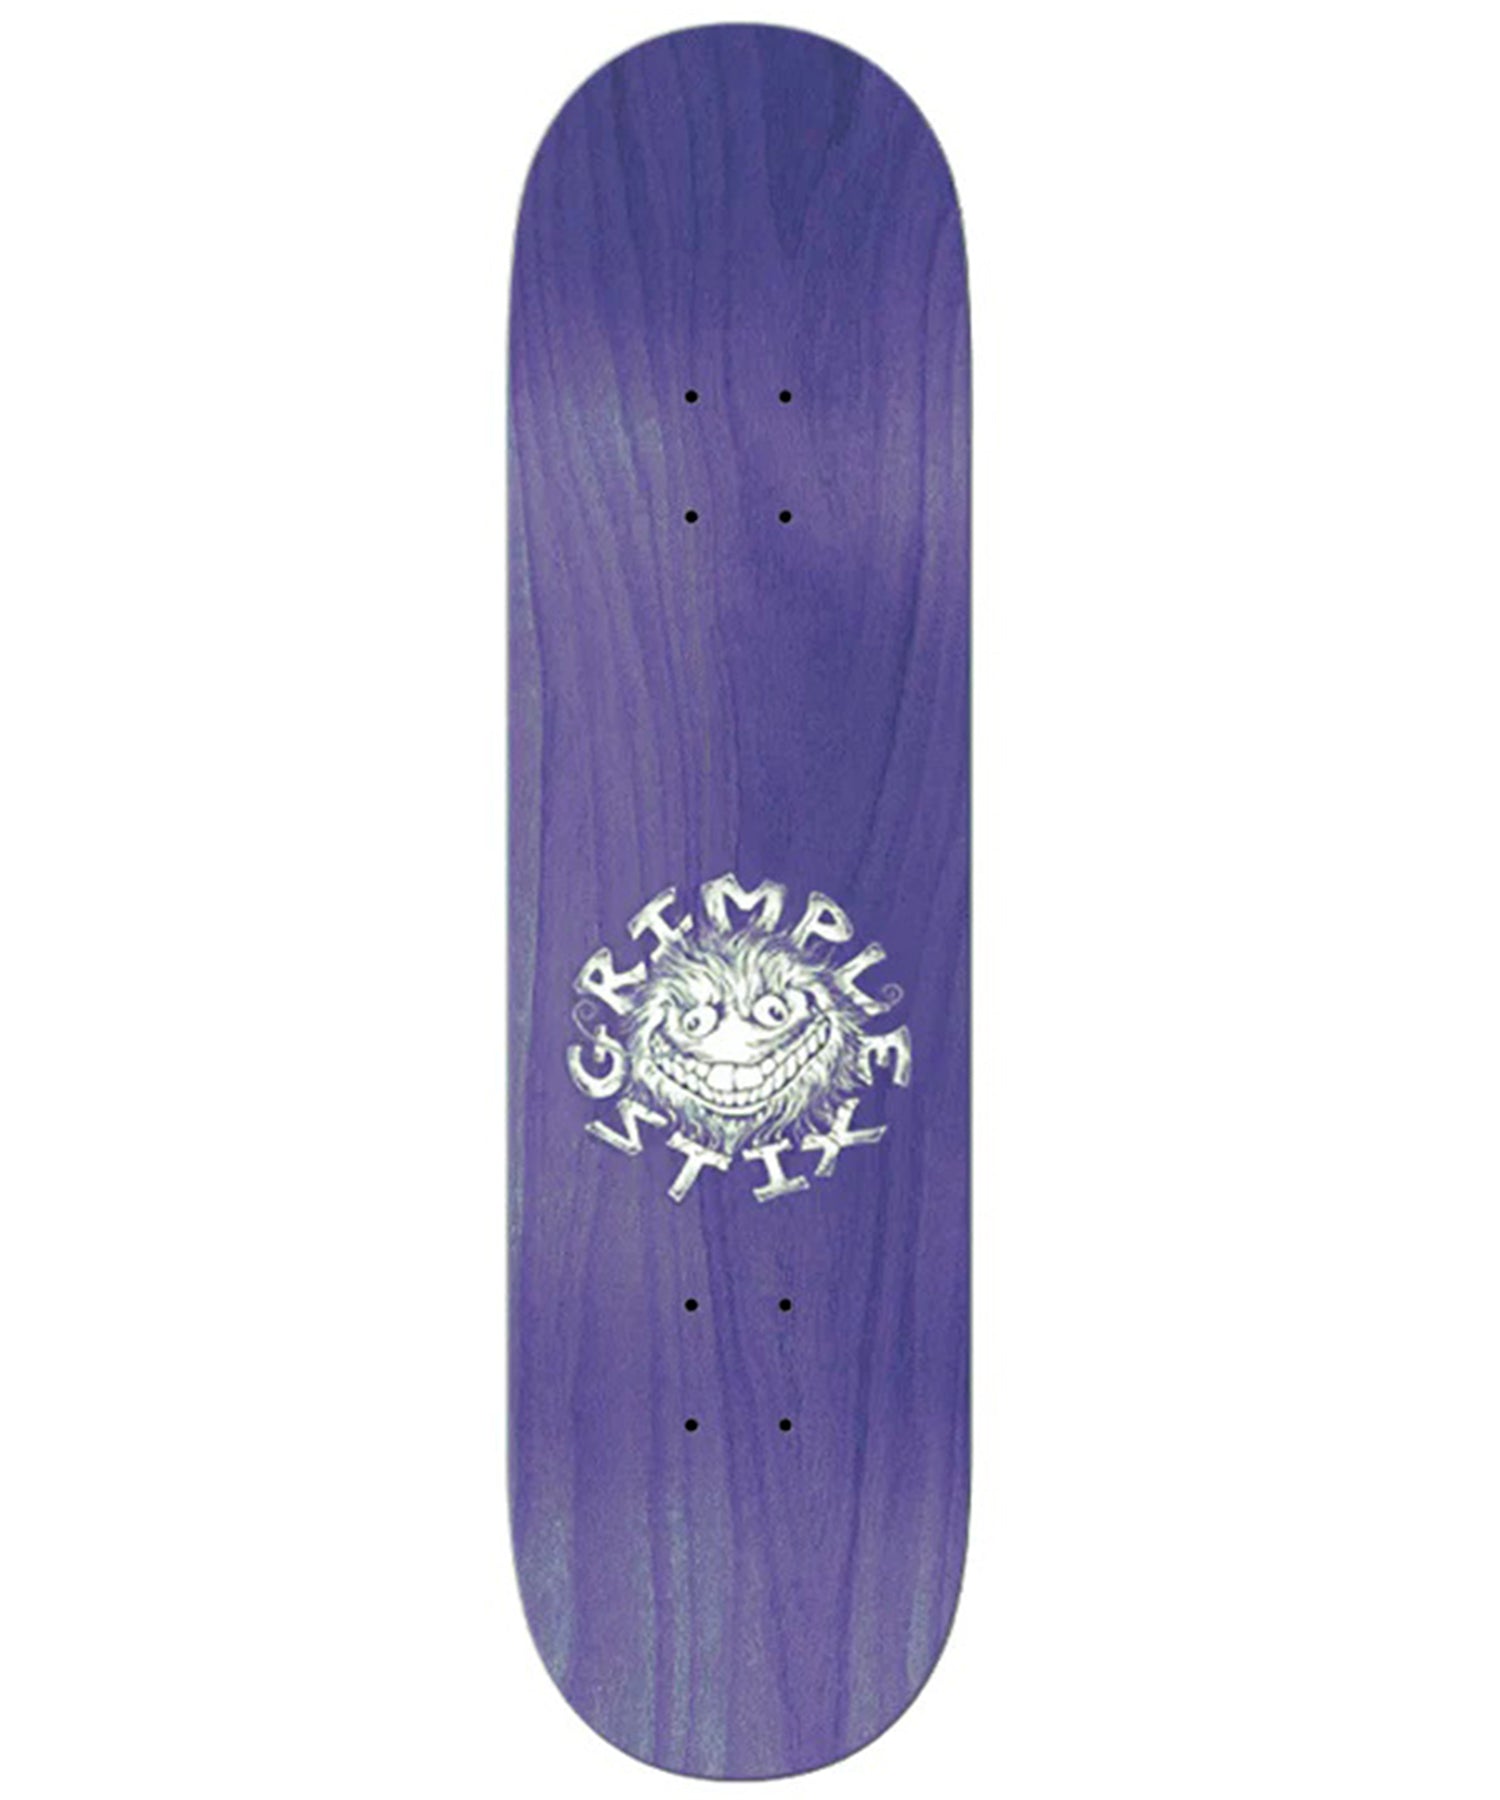 tabla-skate-antihero-chris-pfanner-grimple-stix-806-pulgadas-modelo-profesional-gráfico-espectacular